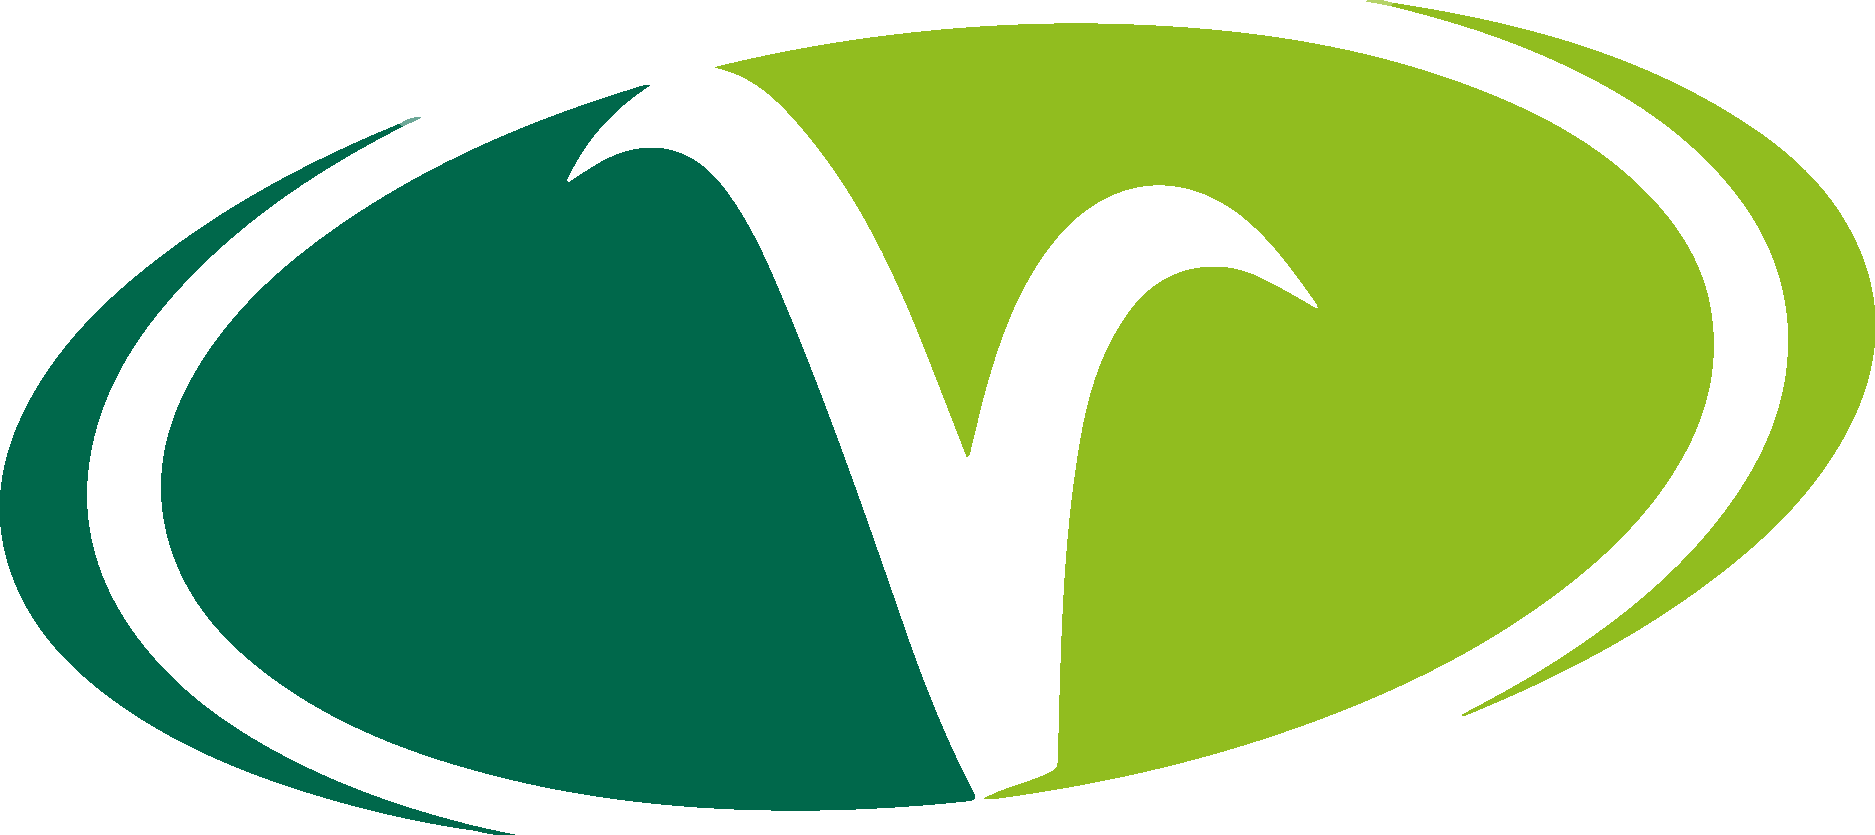 File:Veg symbol.svg - Wikimedia Commons